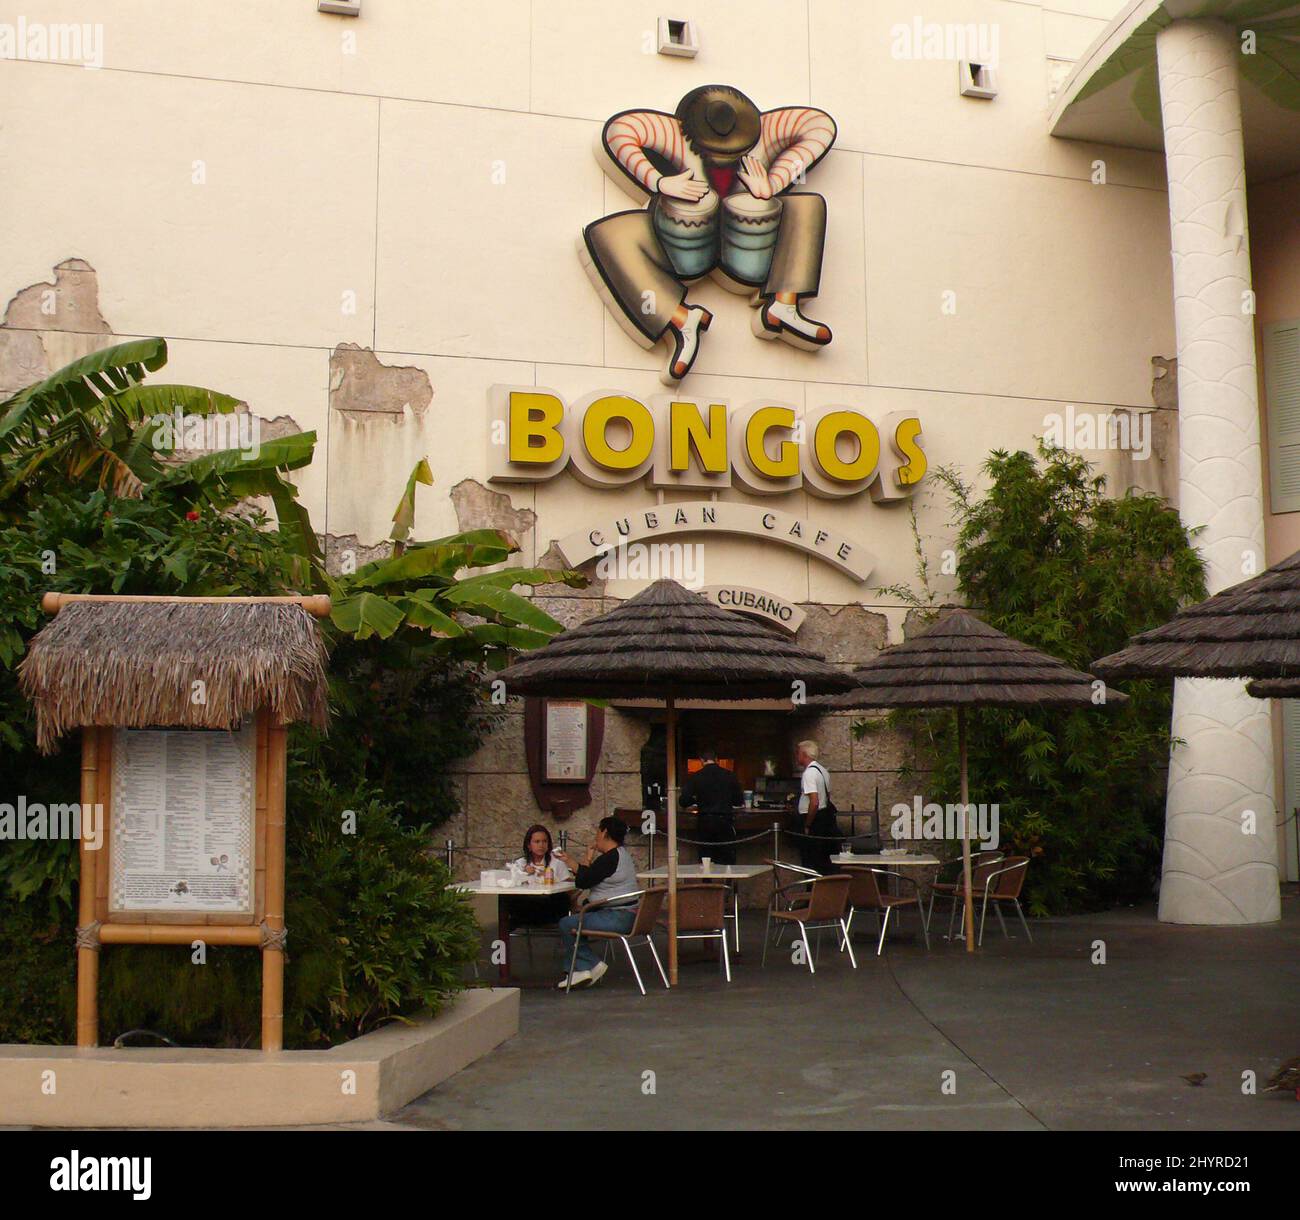 Bongos Cuban Cafe, owned by Gloria and Emilio Estefan, at Walt Disney World in Orlando, Florida. Stock Photo